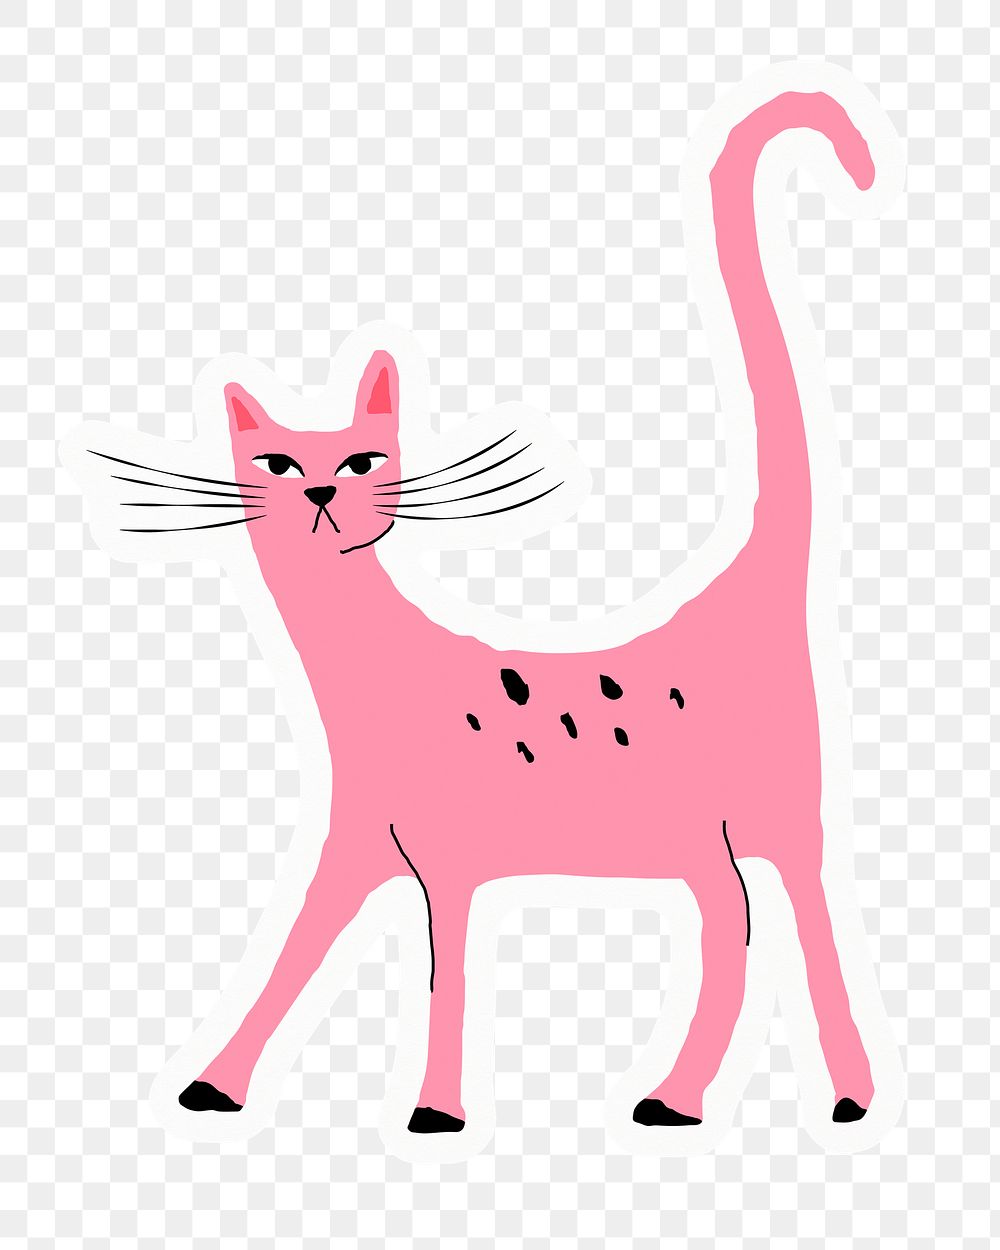 Pink cat png sticker, drawing illustration, transparent background